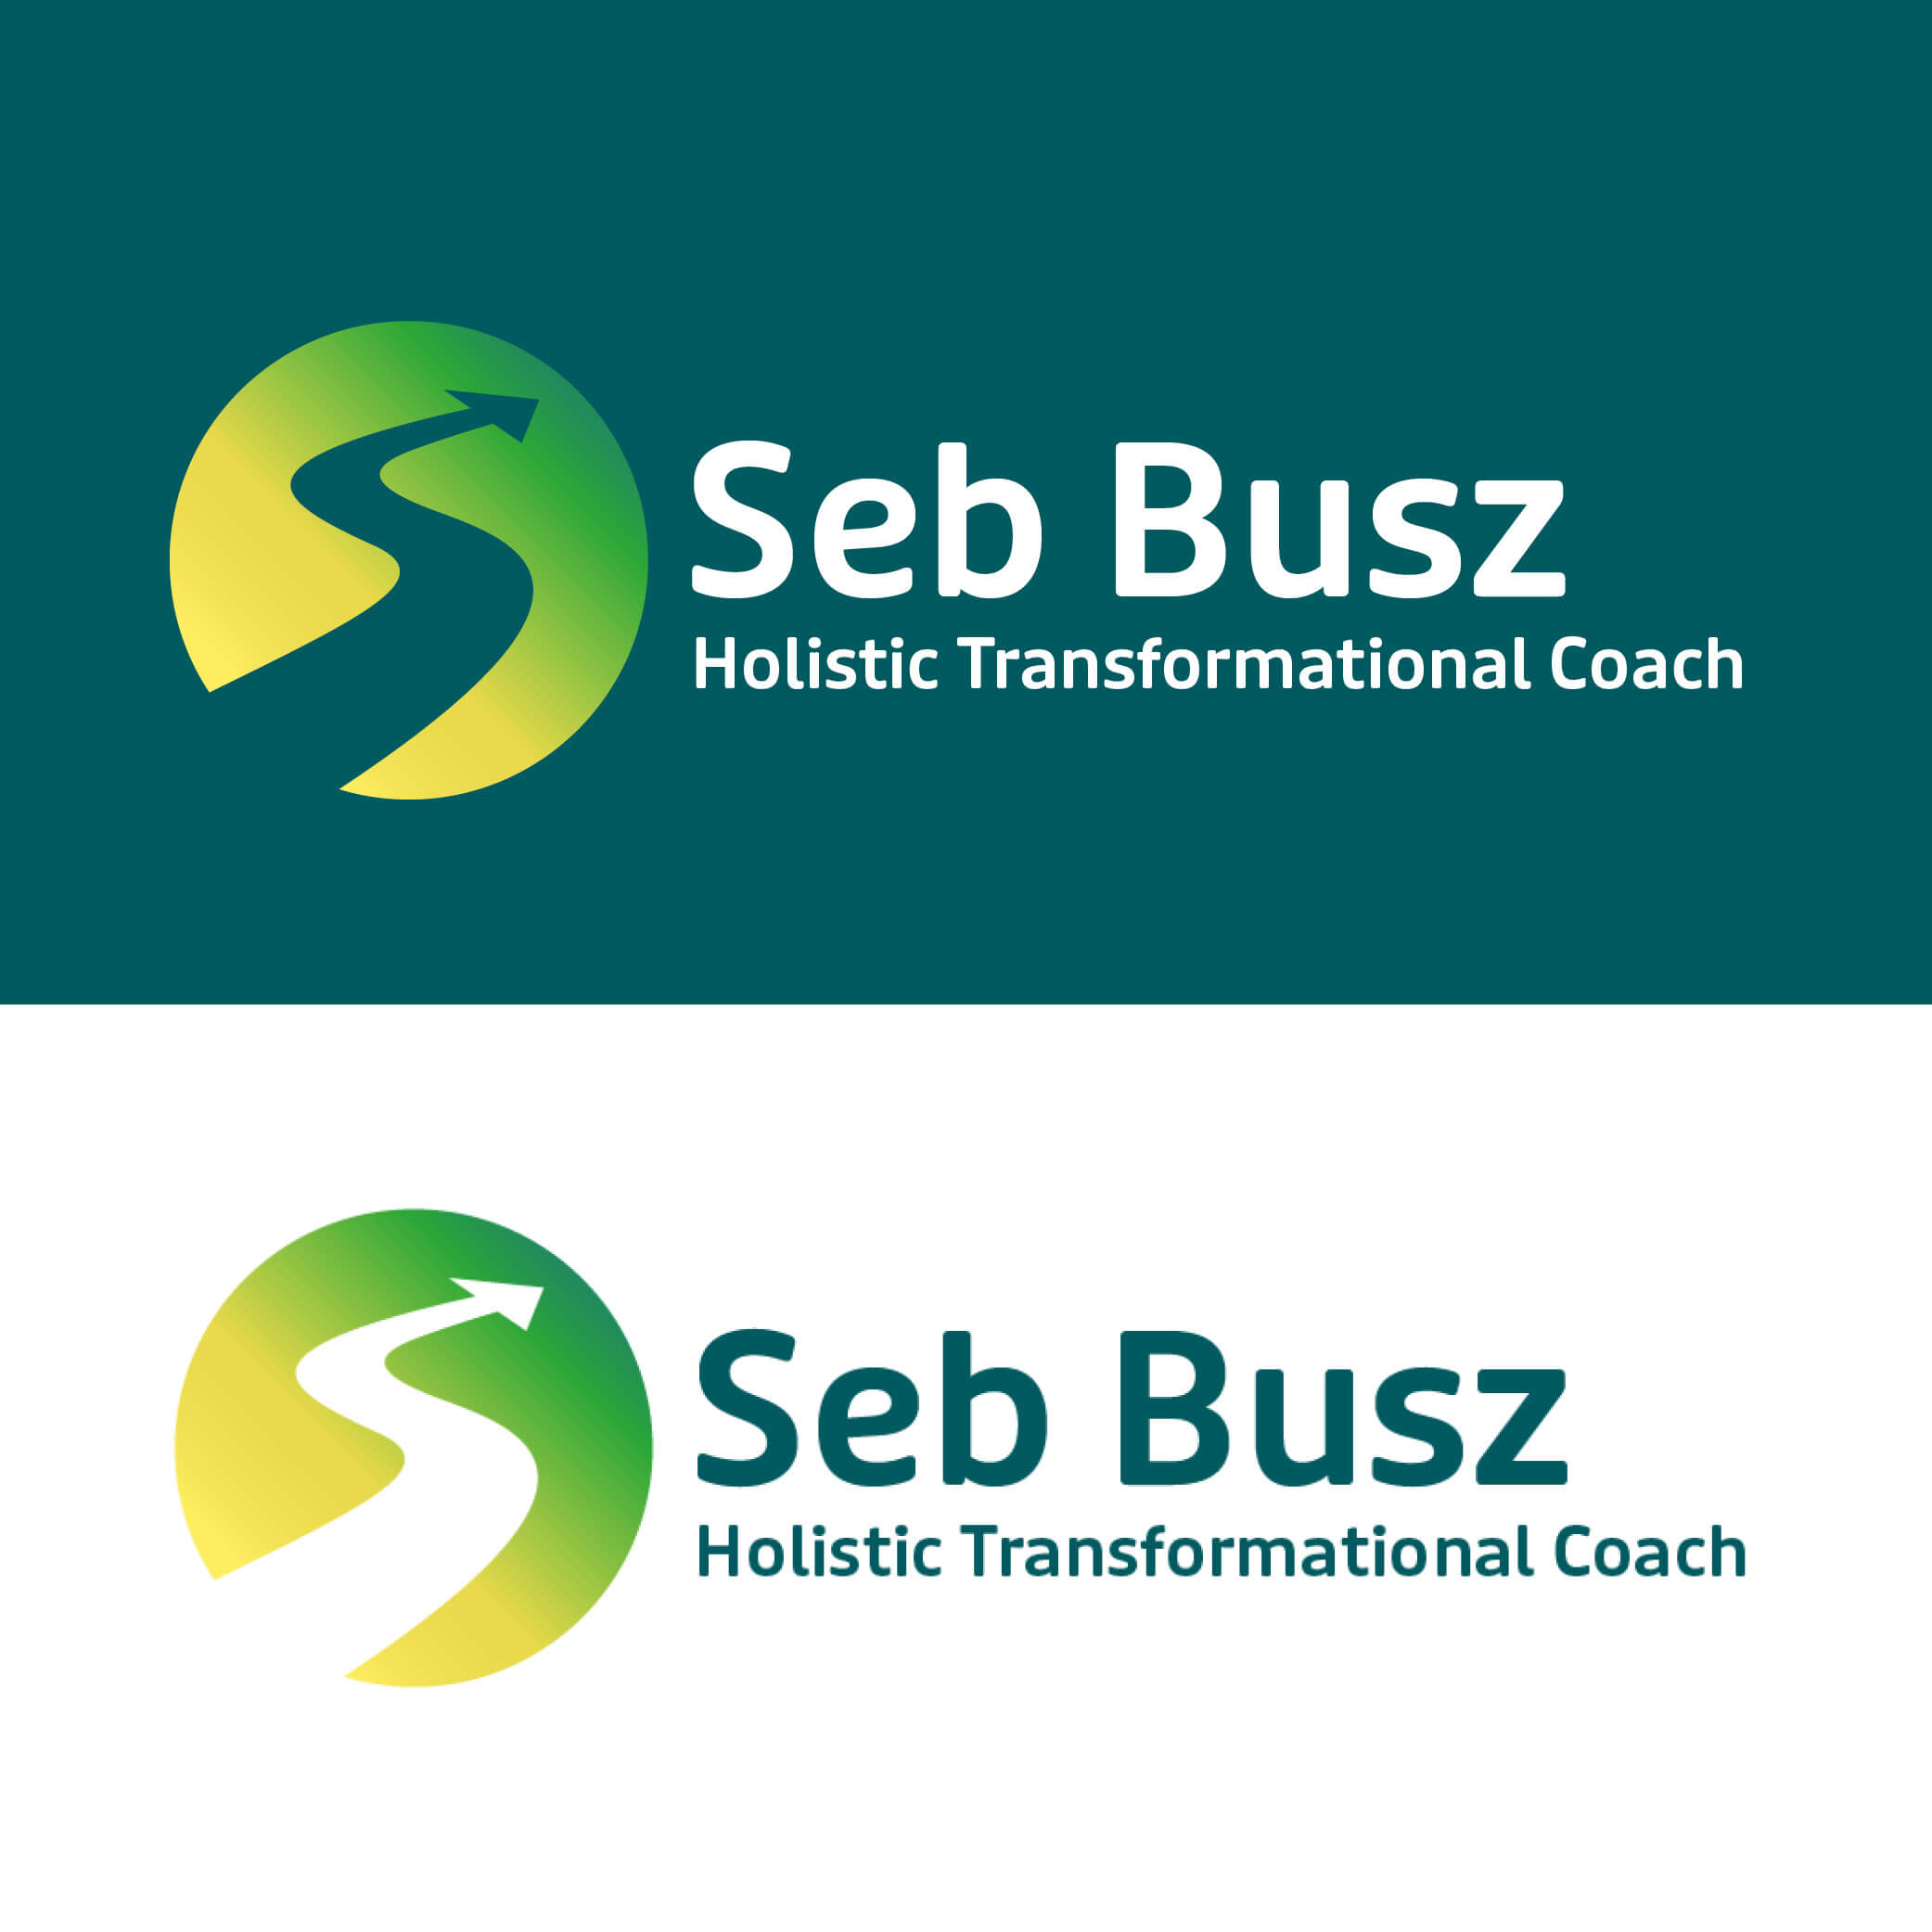 logo design example for seb busz